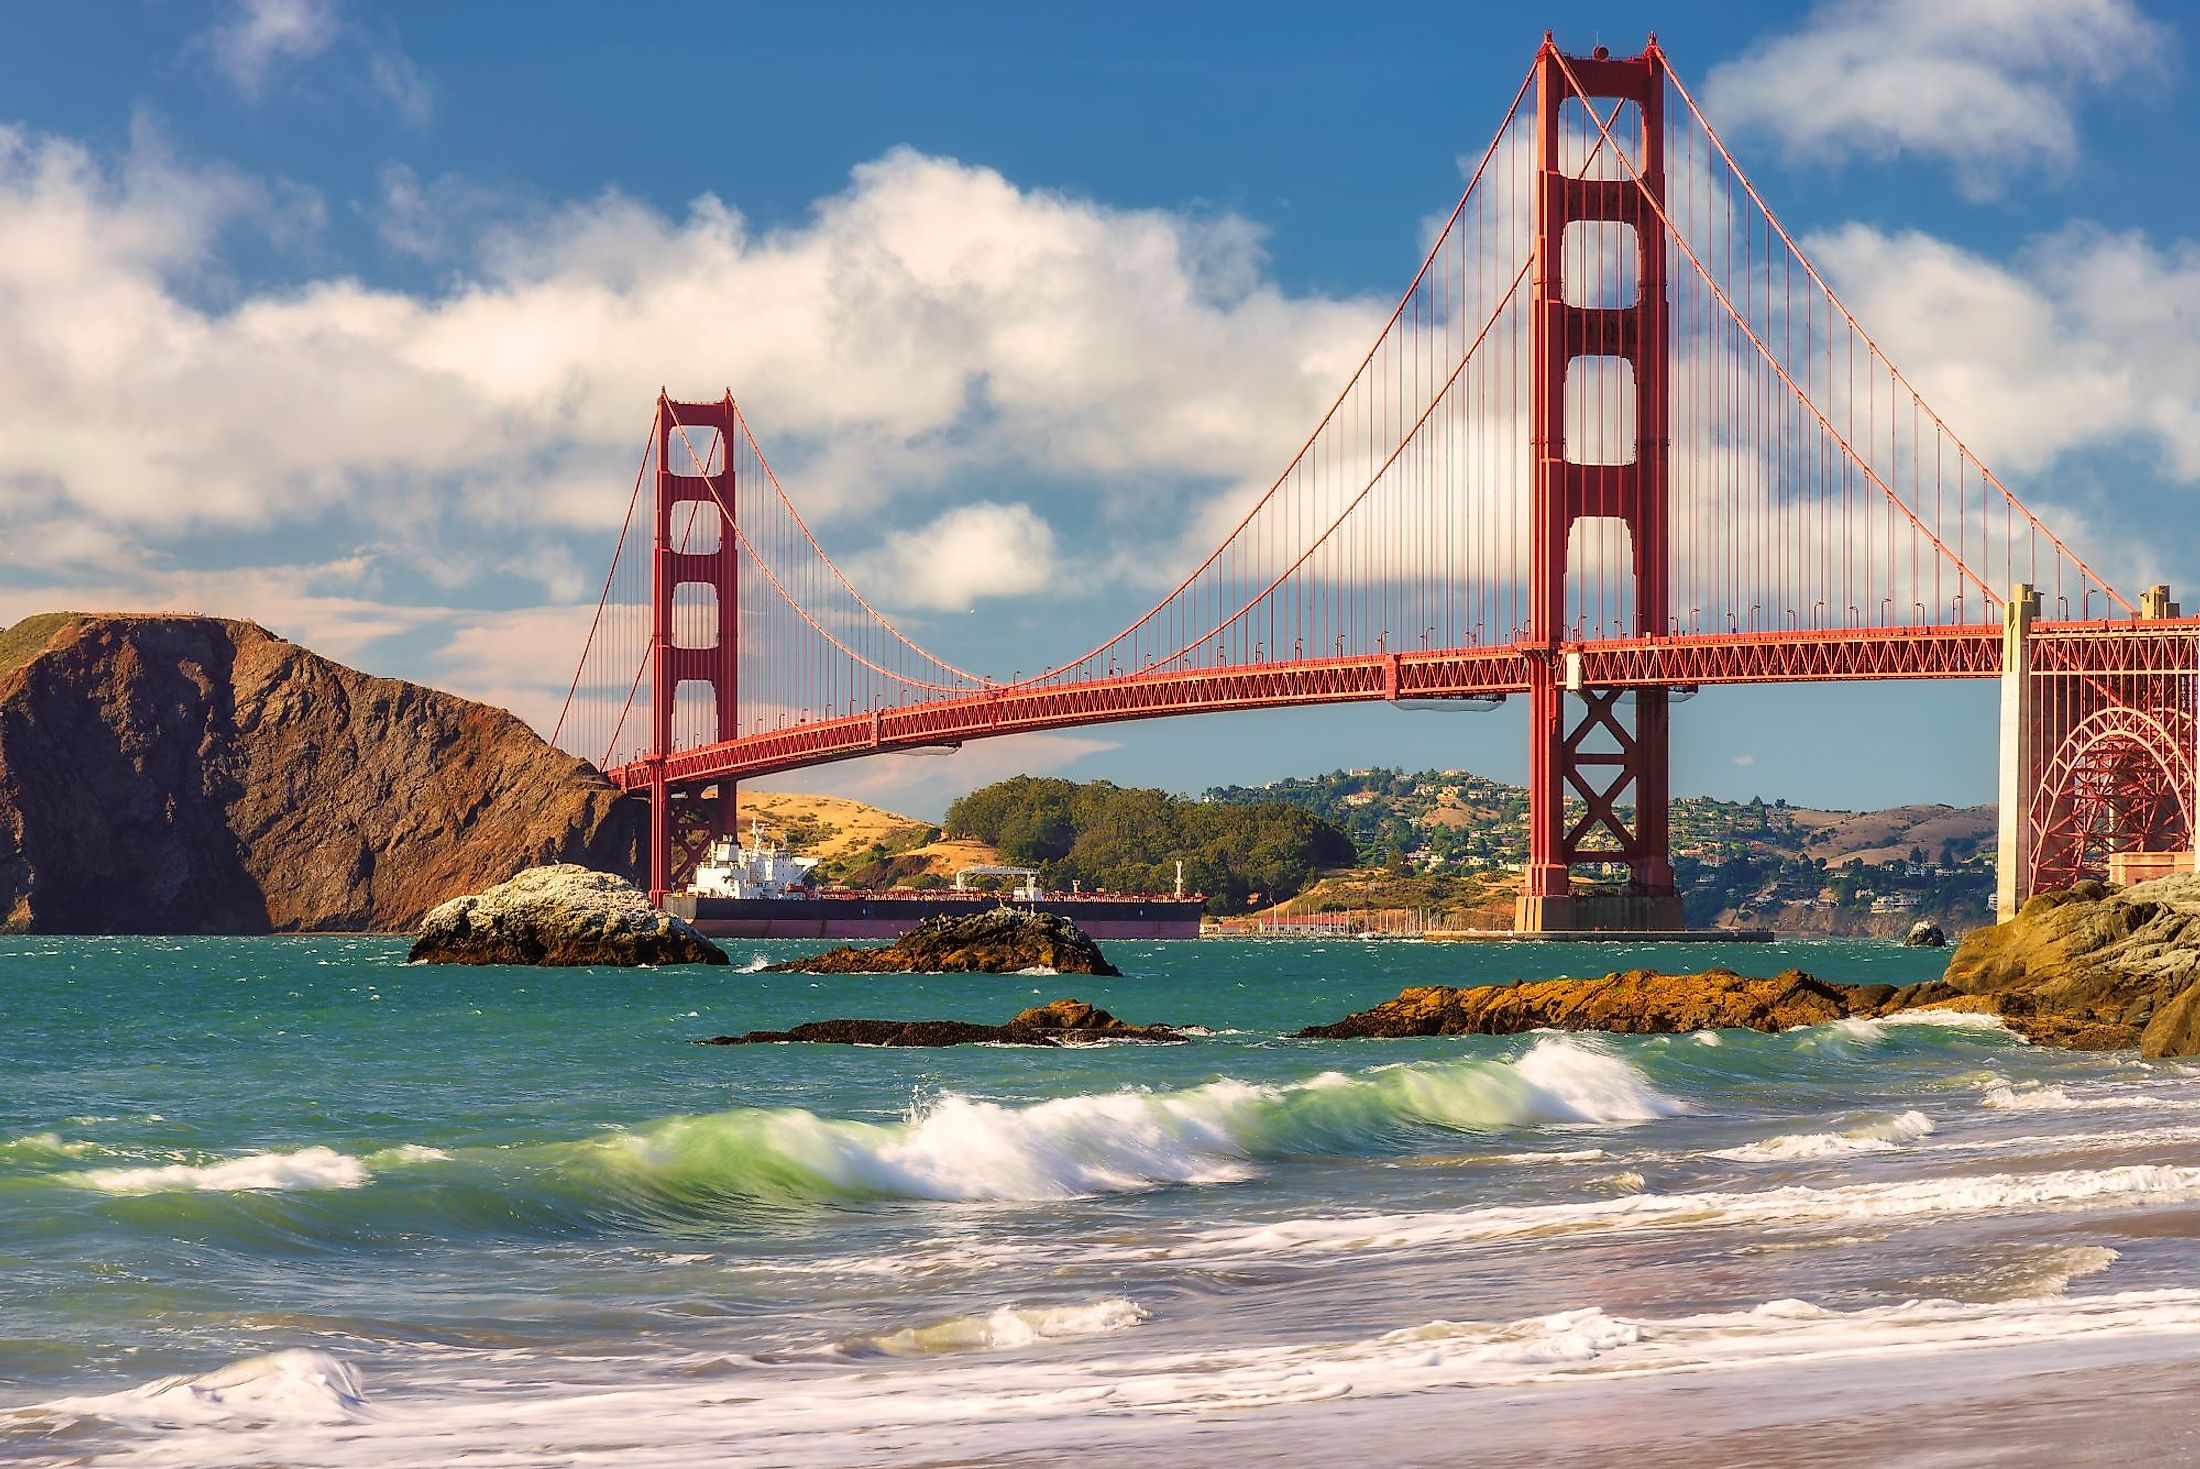 The Golden Gate Bridge spans the Golden Gate Strait. 